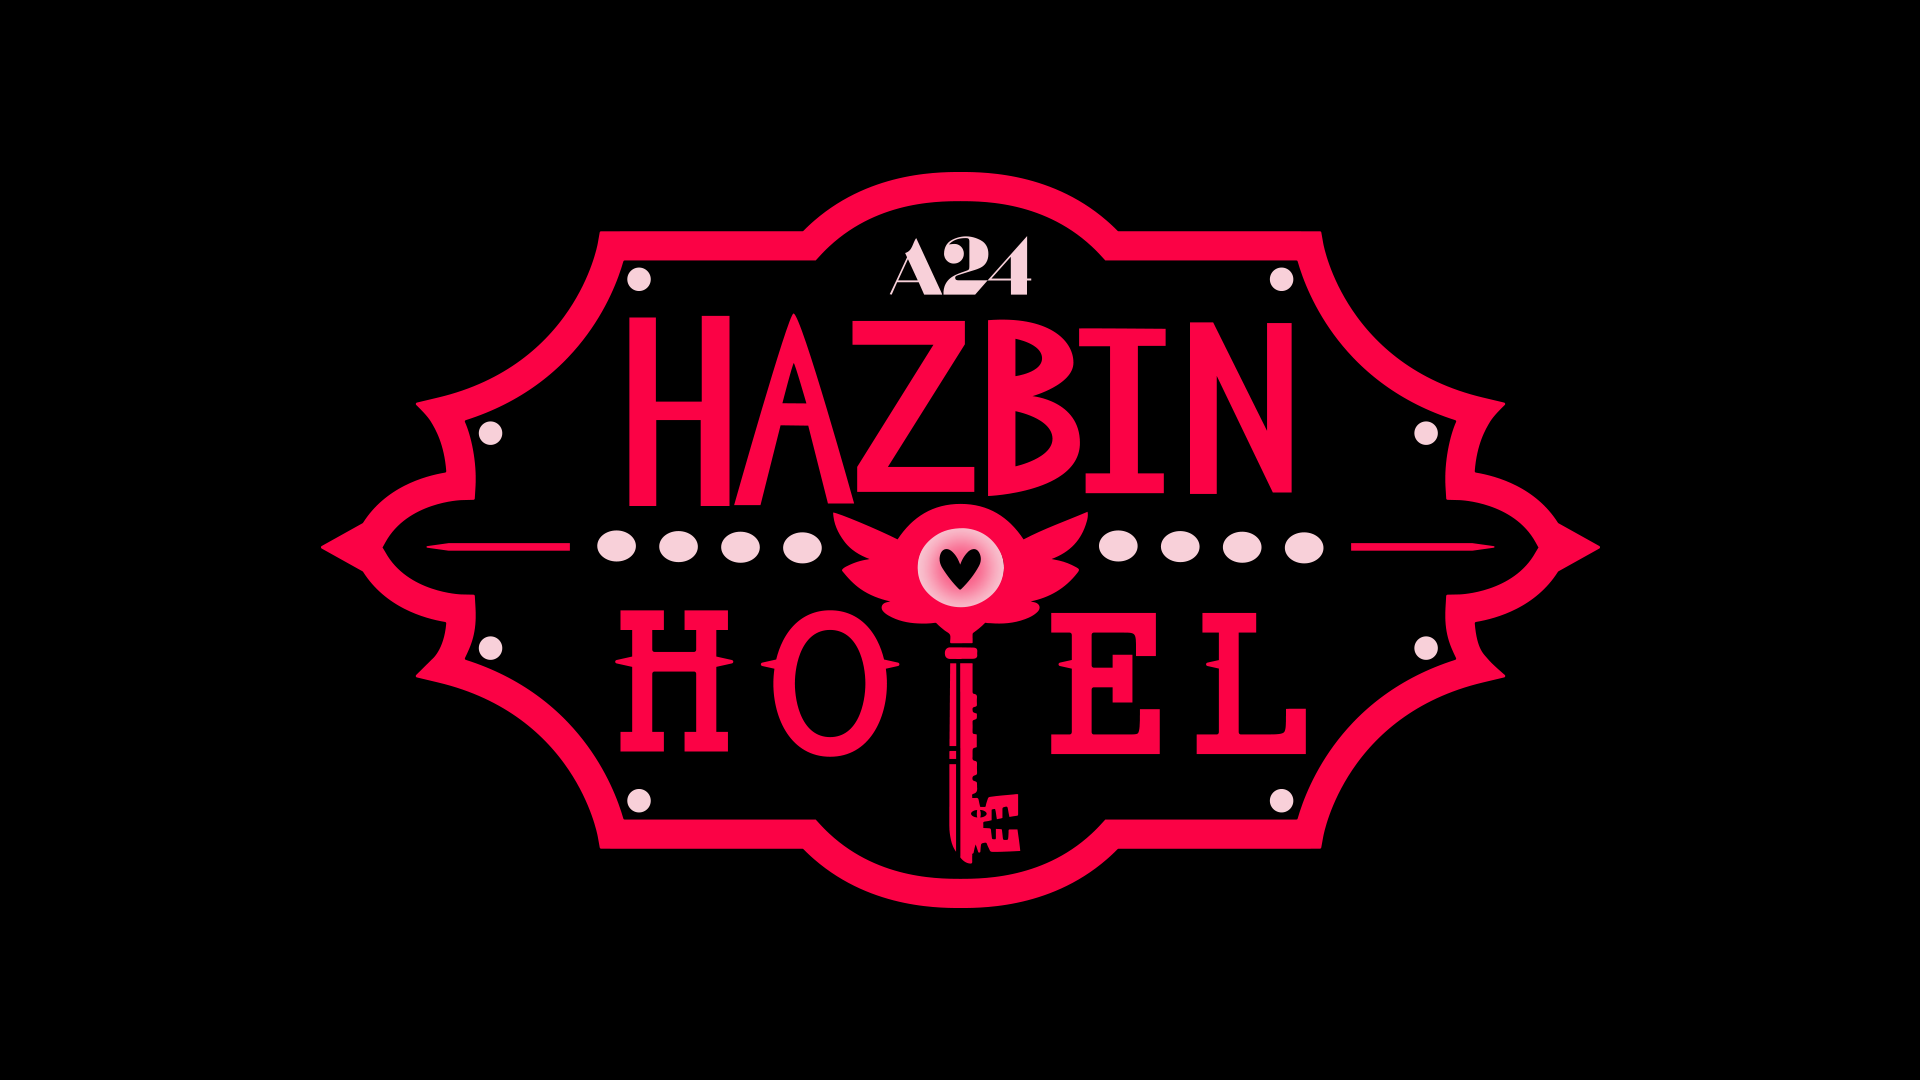 How to watch Prime Video's 'Hazbin Hotel' when it premieres January 19